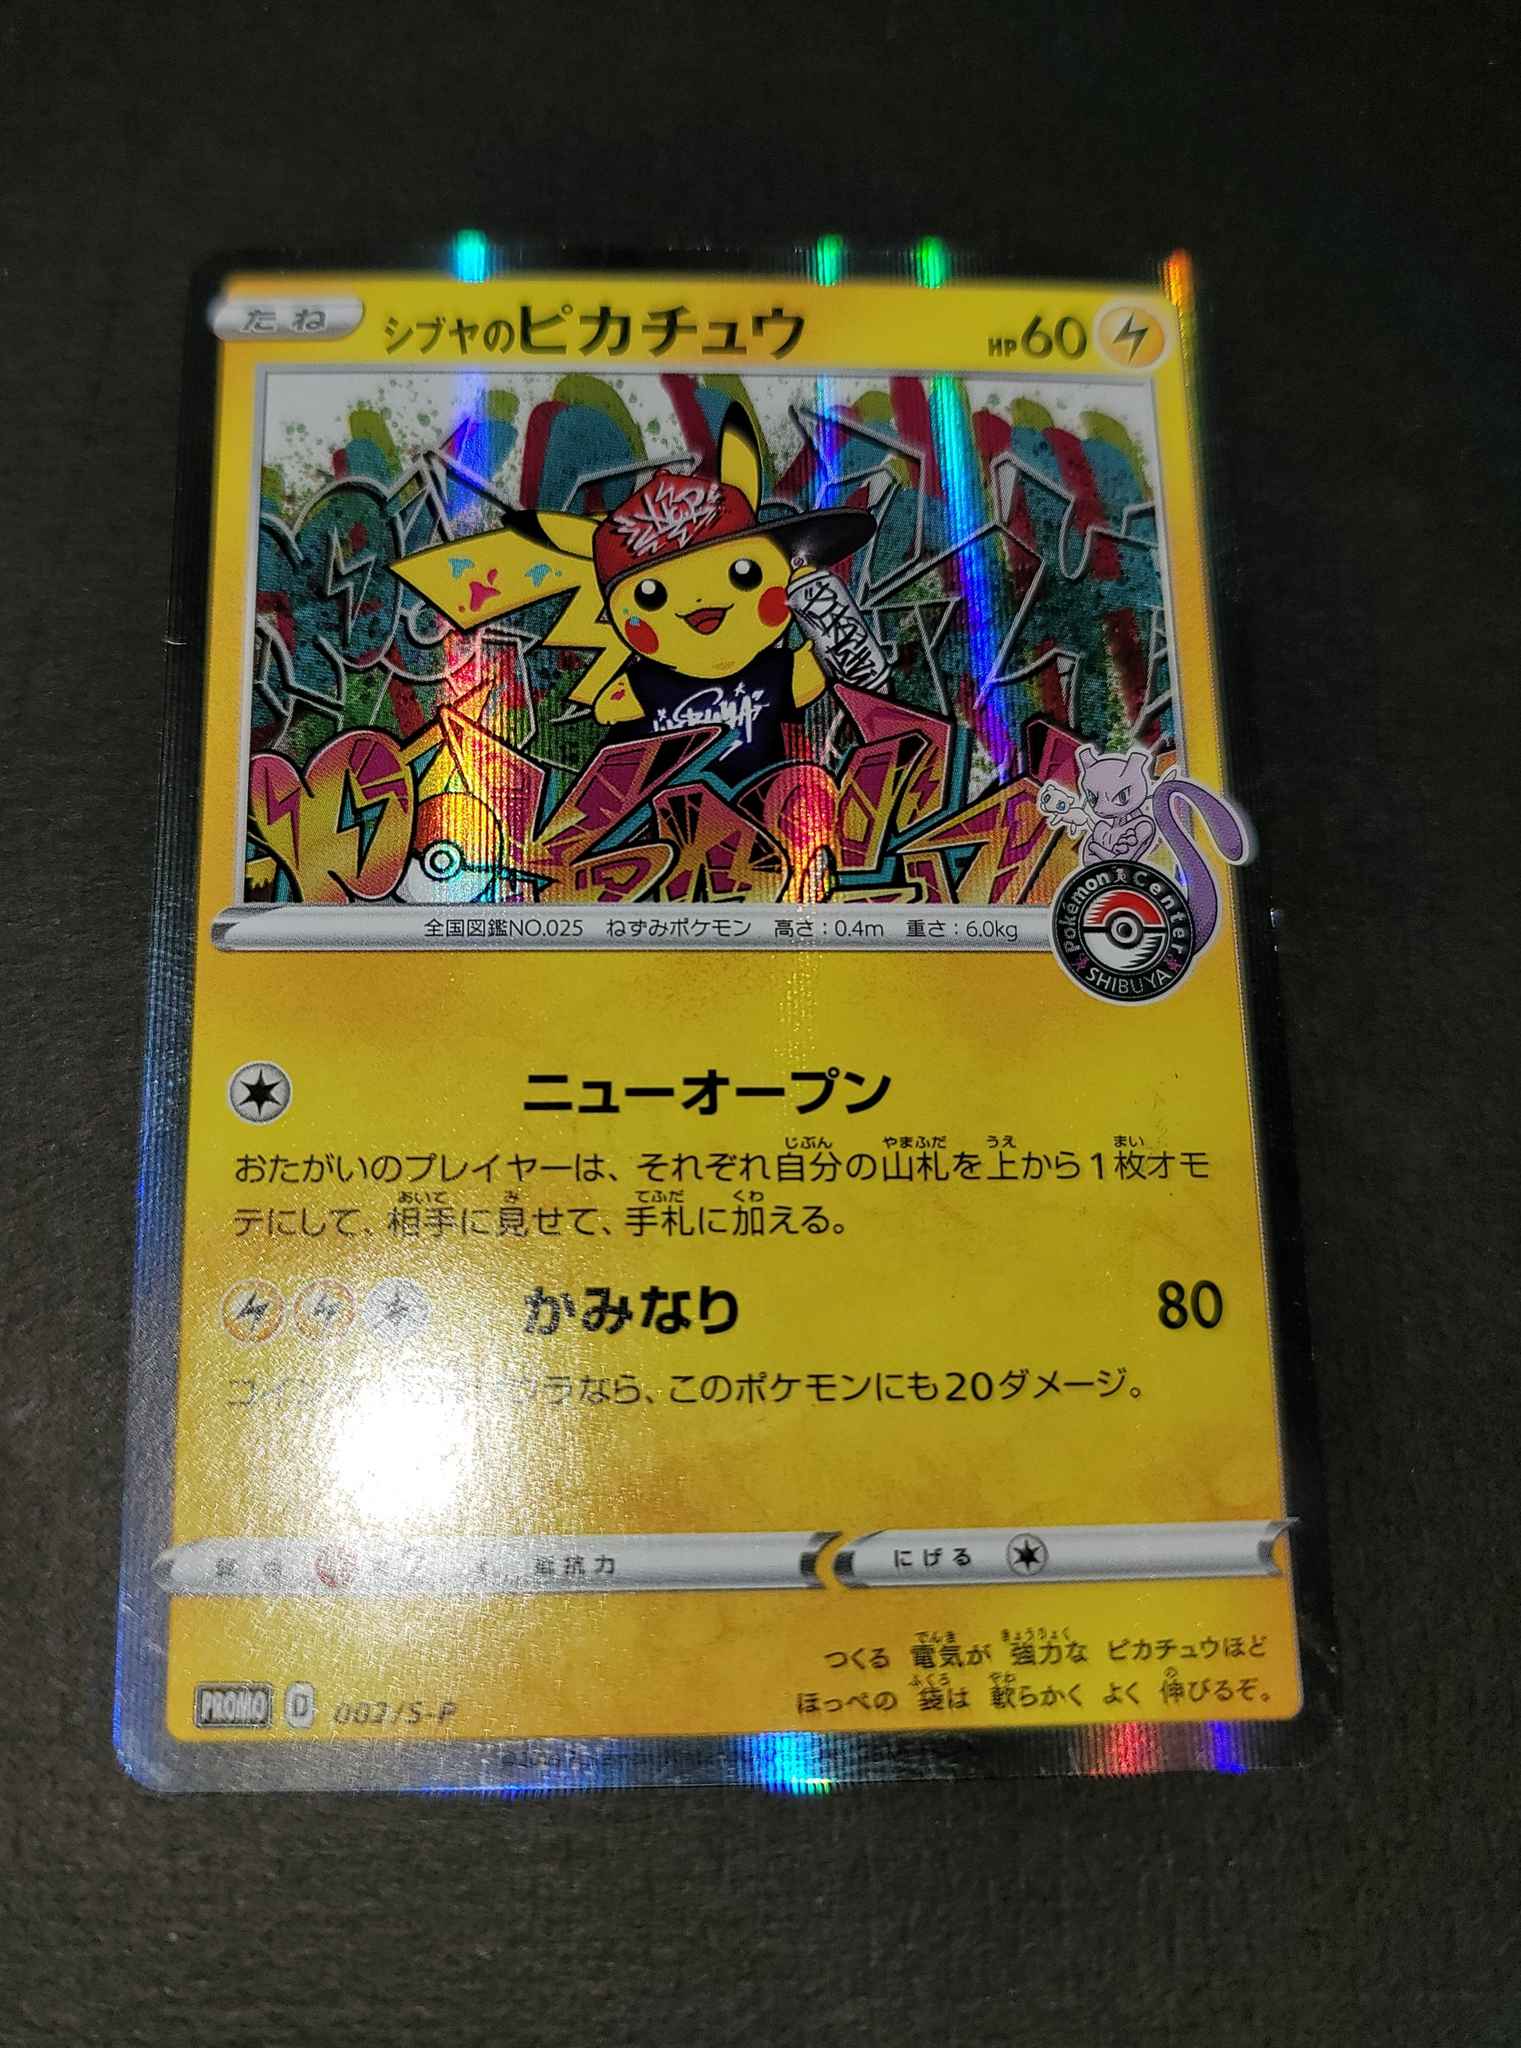 Shibuya Pikachu Tokyo Promo Limited 002/S-P Pokemon Card Lightly played Japanese